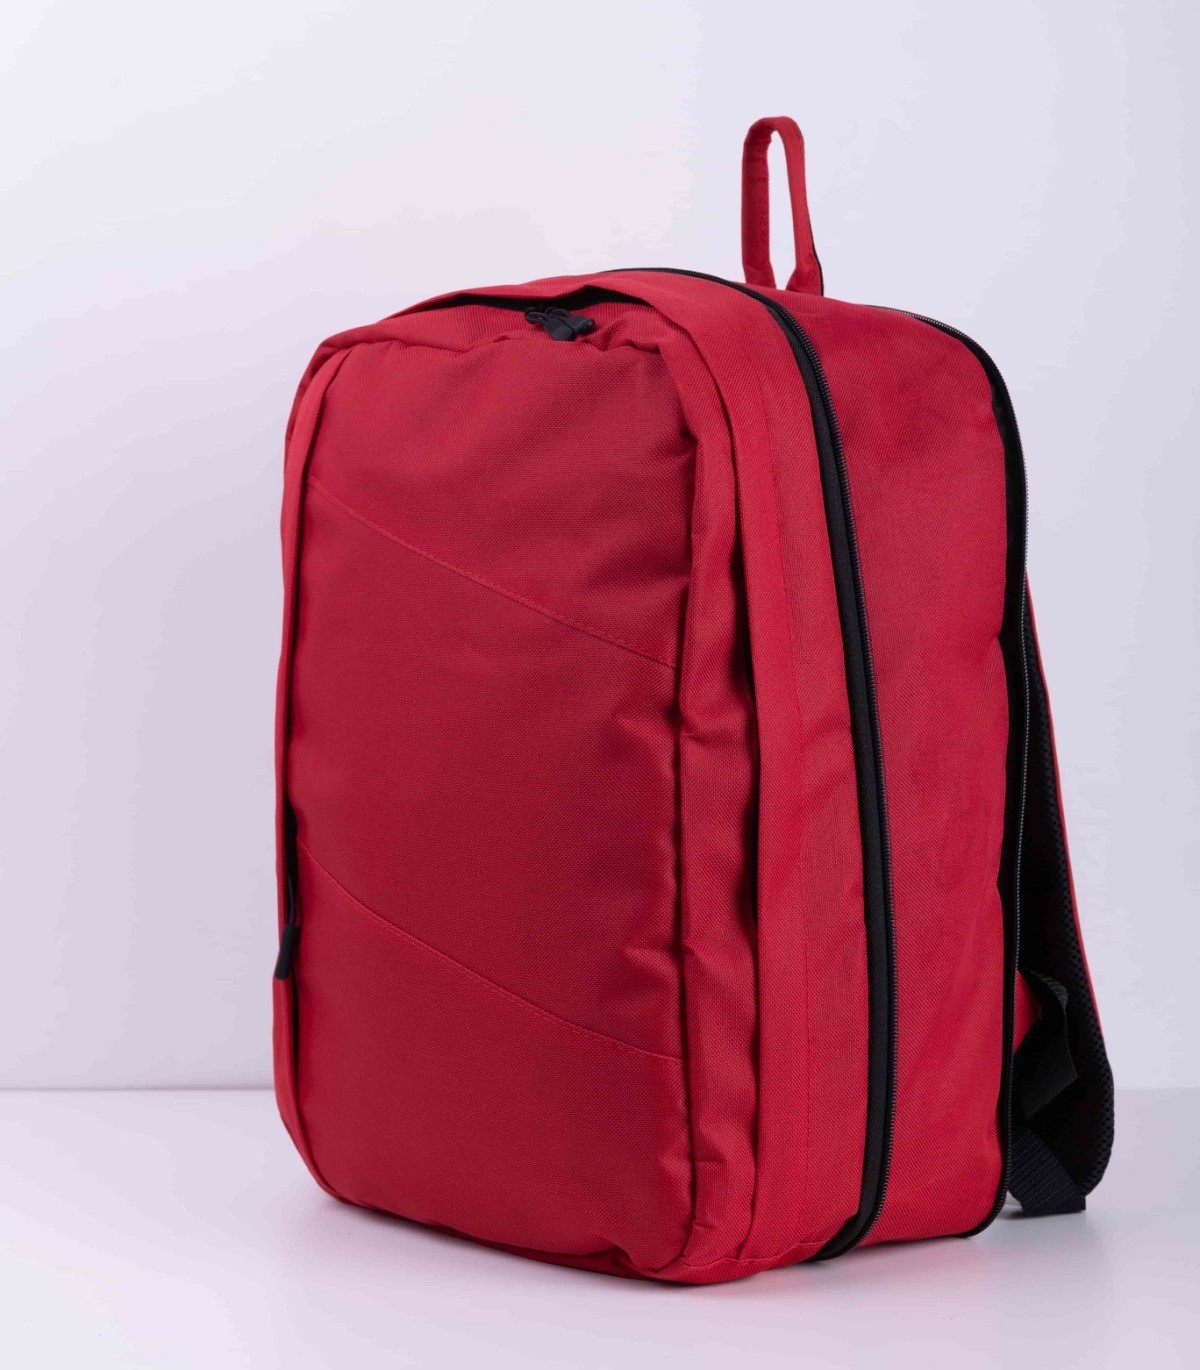 TRVLbag red transformer | hand luggage | backpack 40x30x10 - 40x30x20